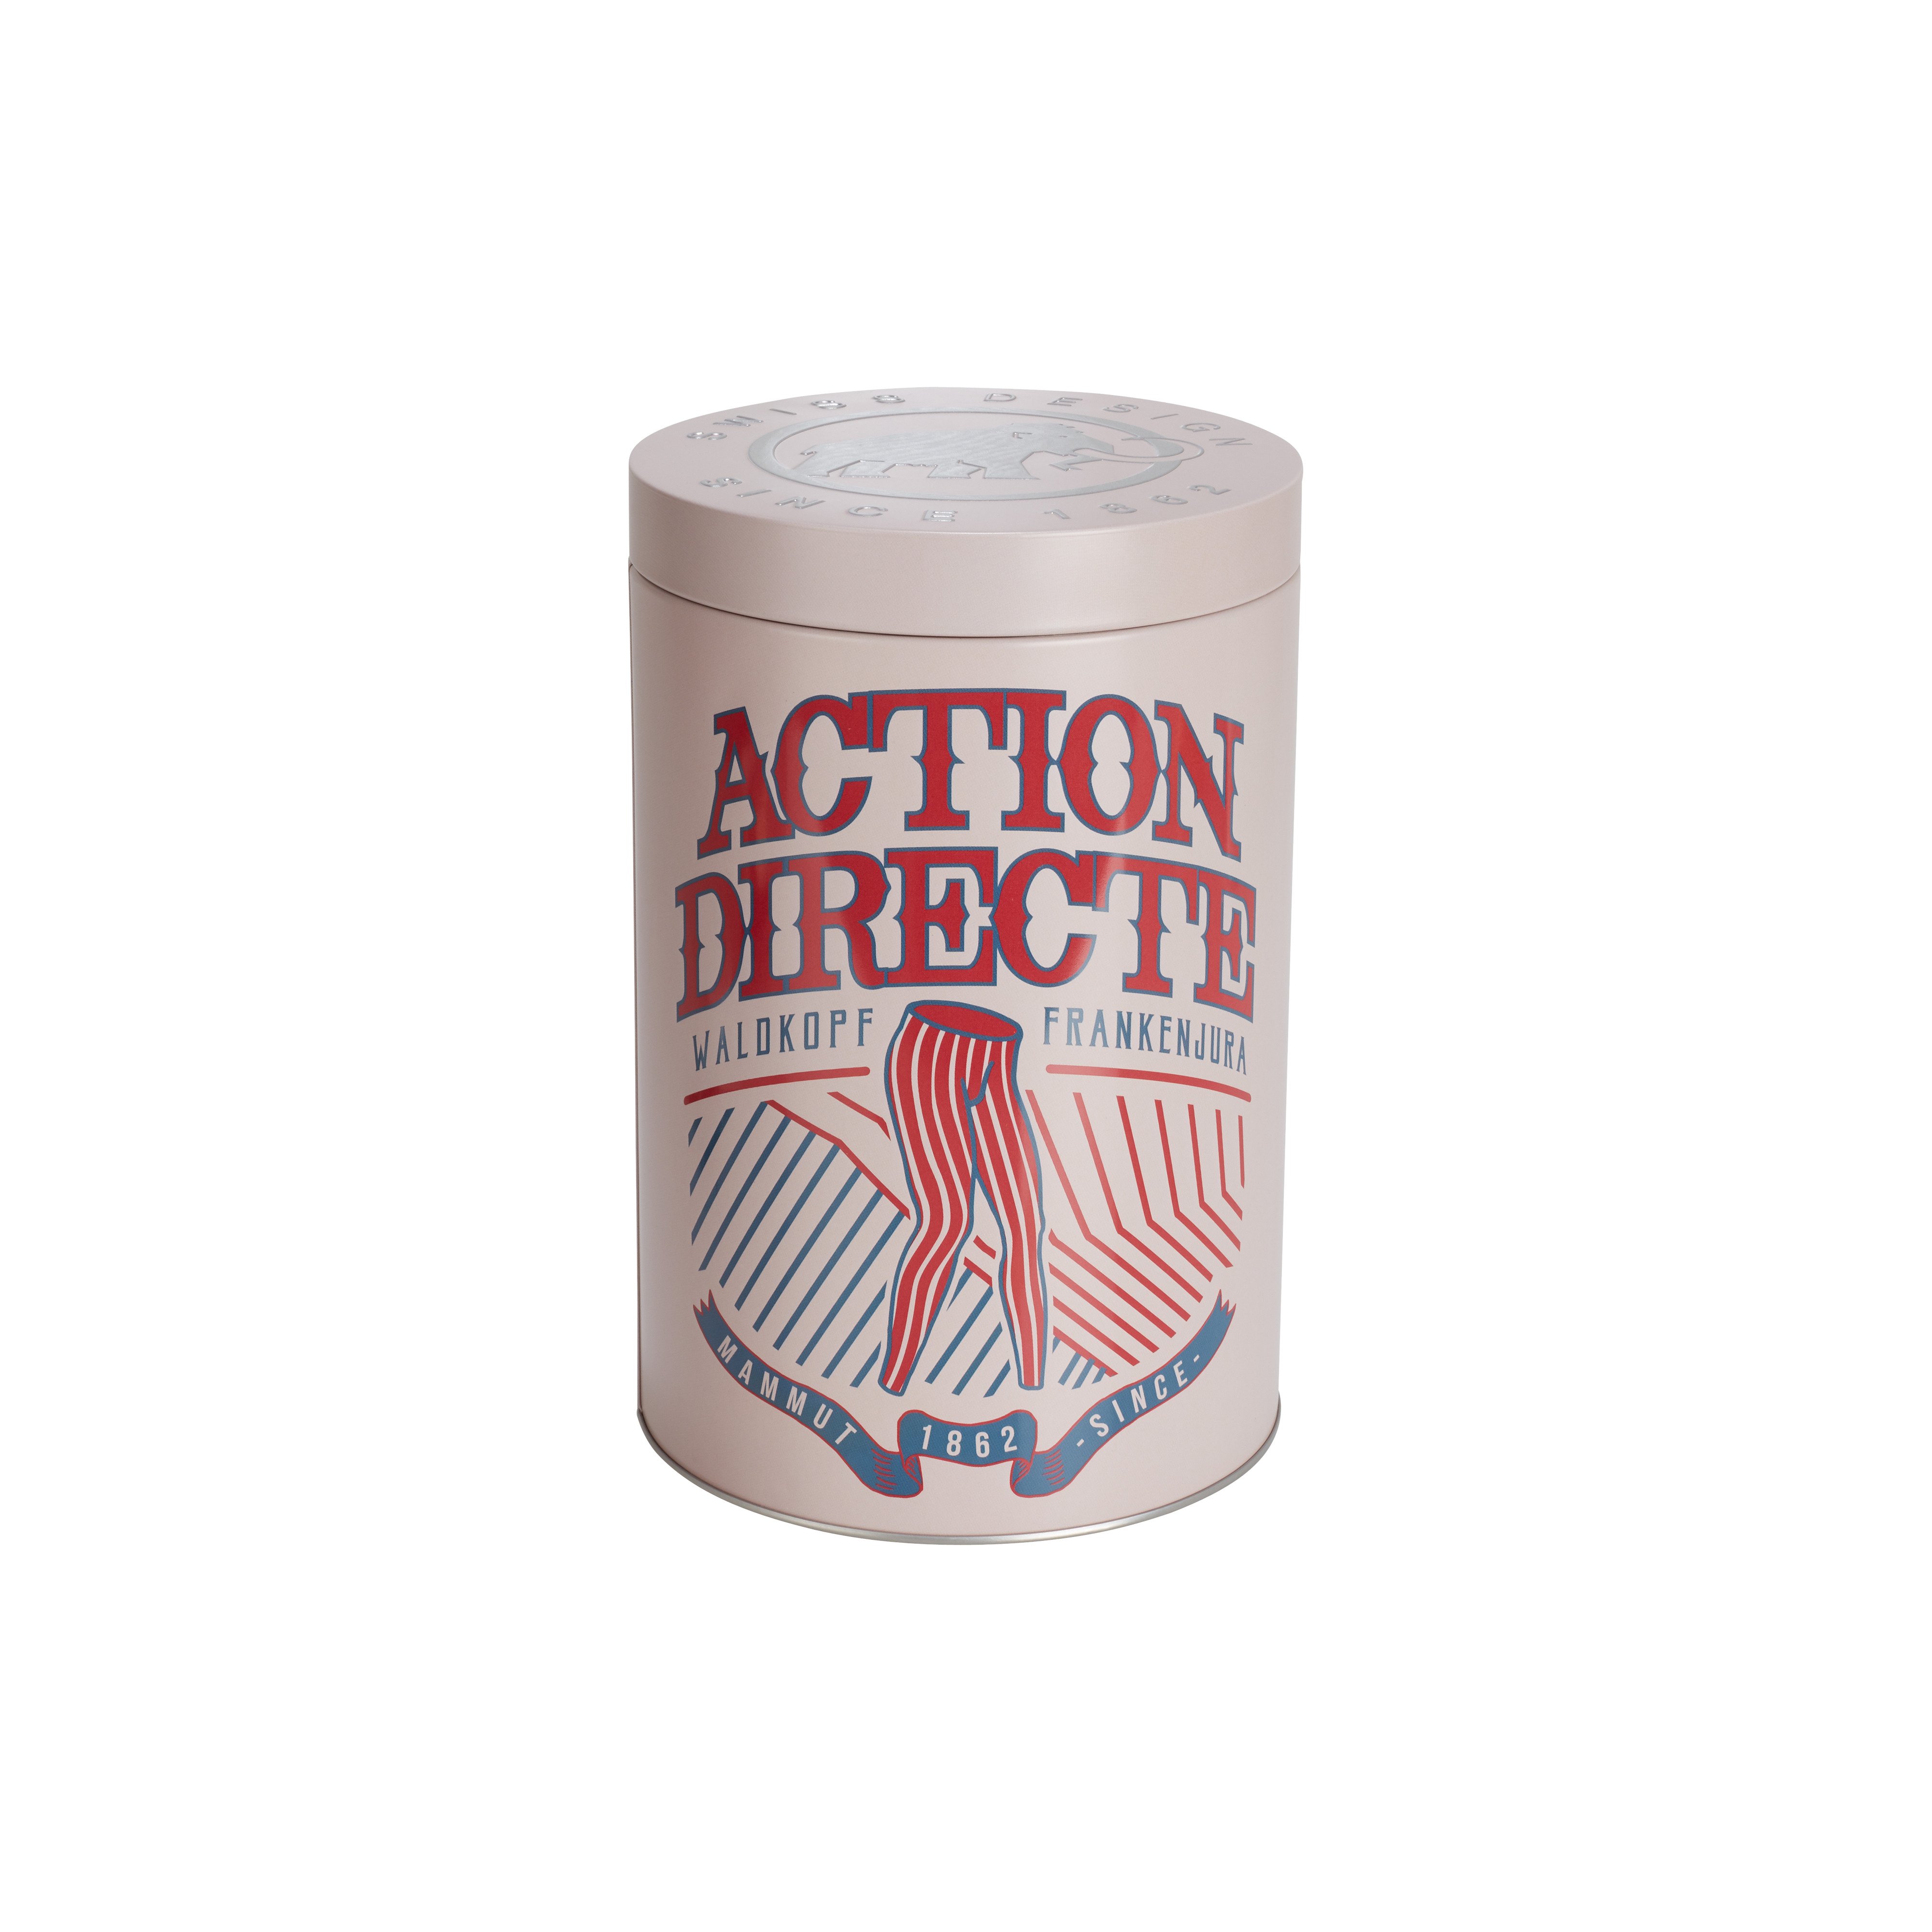 Pure Chalk Collectors Box - action directe, one size product image